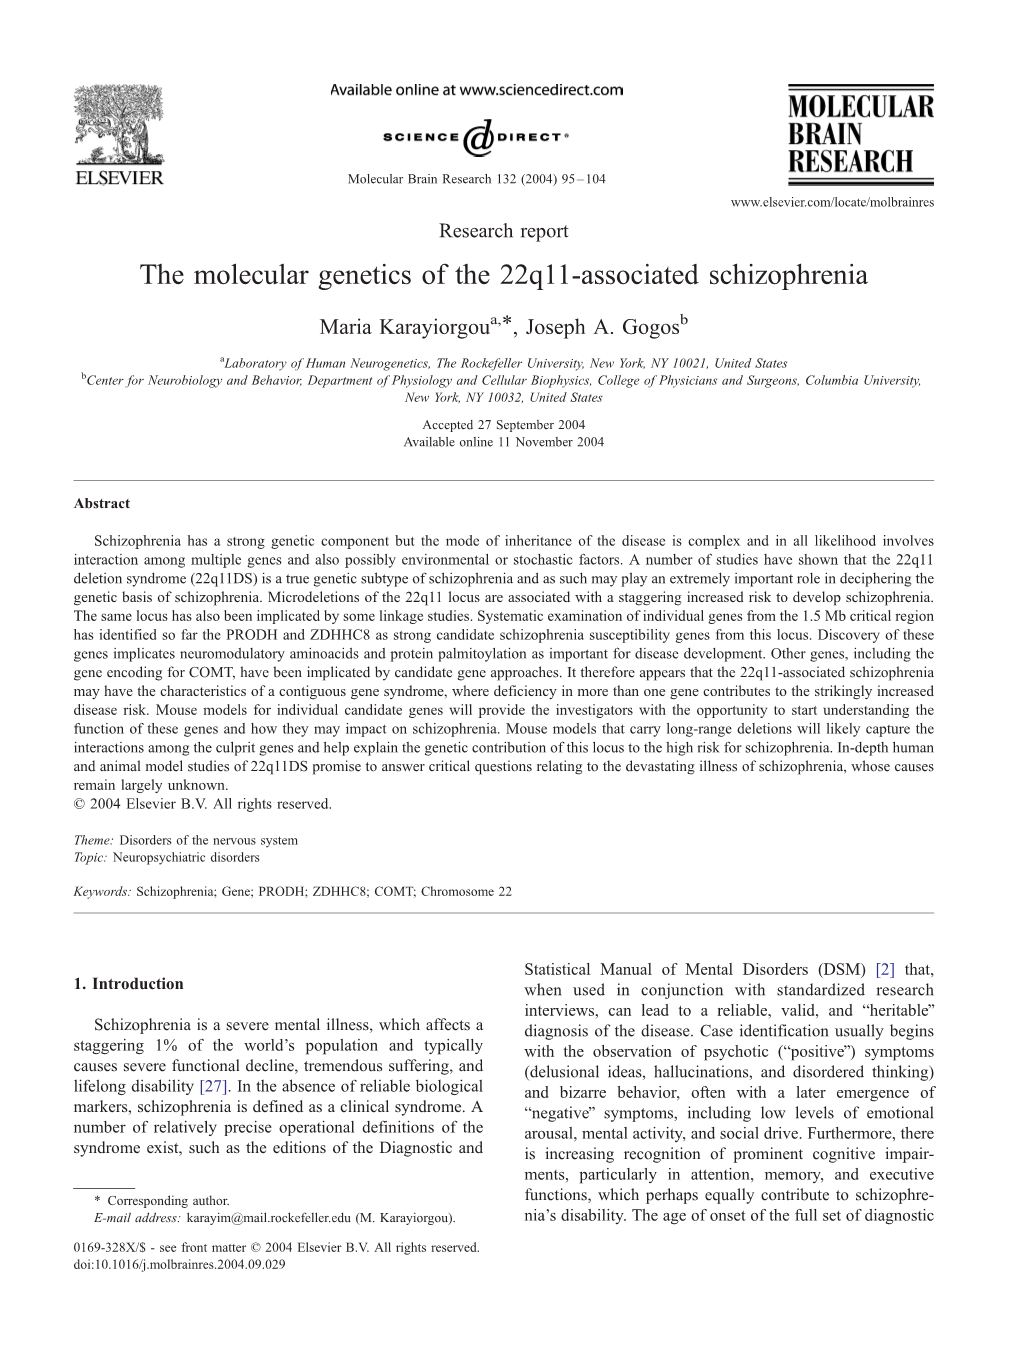 The Molecular Genetics of the 22Q11-Associated Schizophrenia